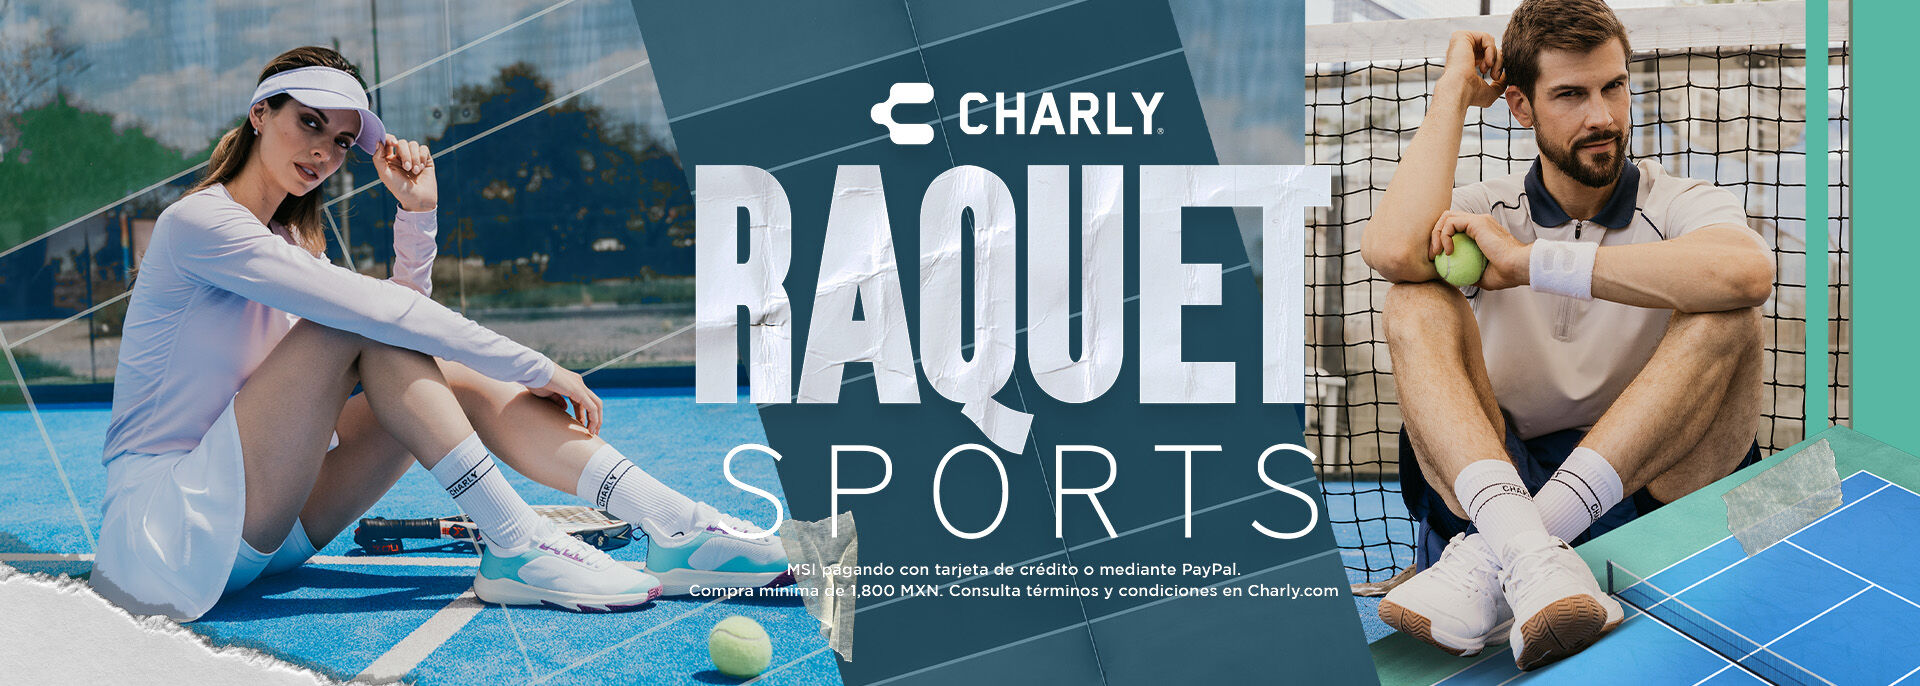 Charly_Raquet_Deportes_D.jpg